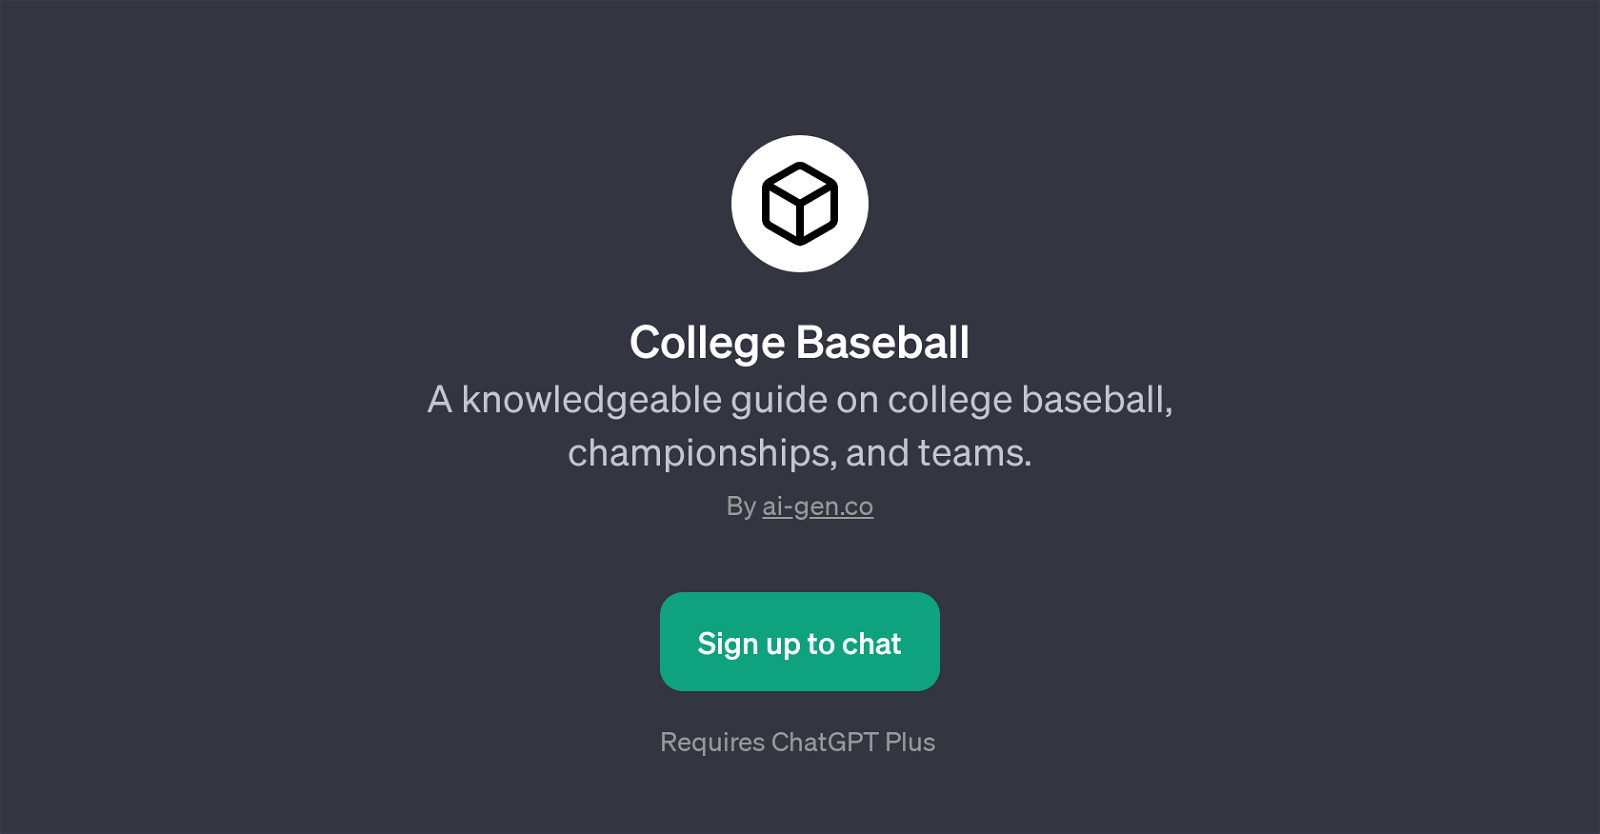 College Baseball website